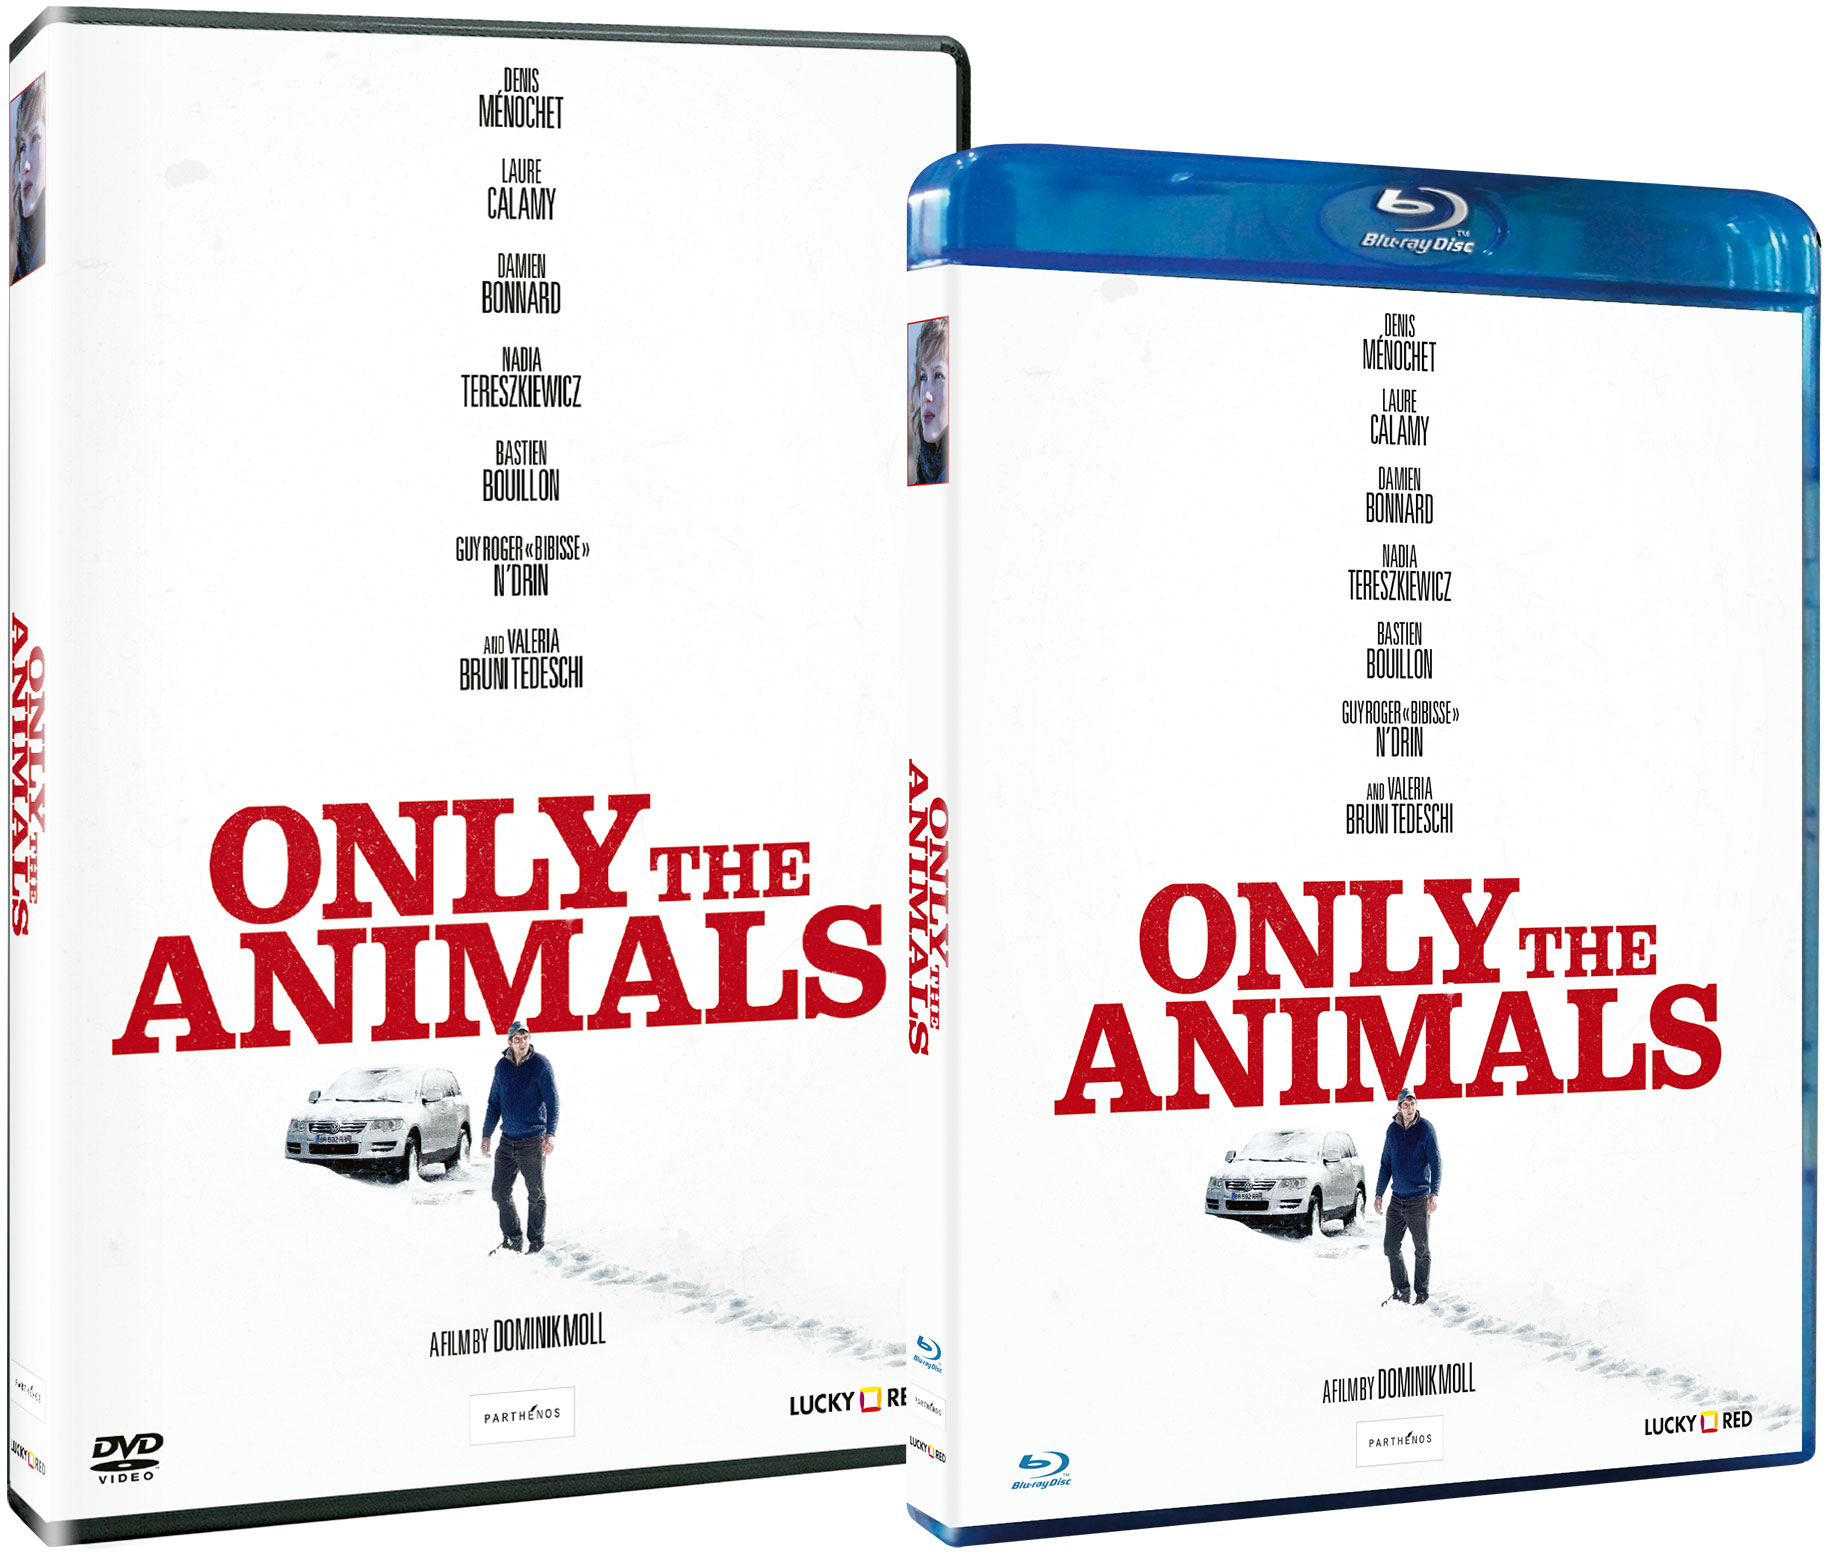 Only the animals - Storie di spiriti amanti in DVD e Blu-ray